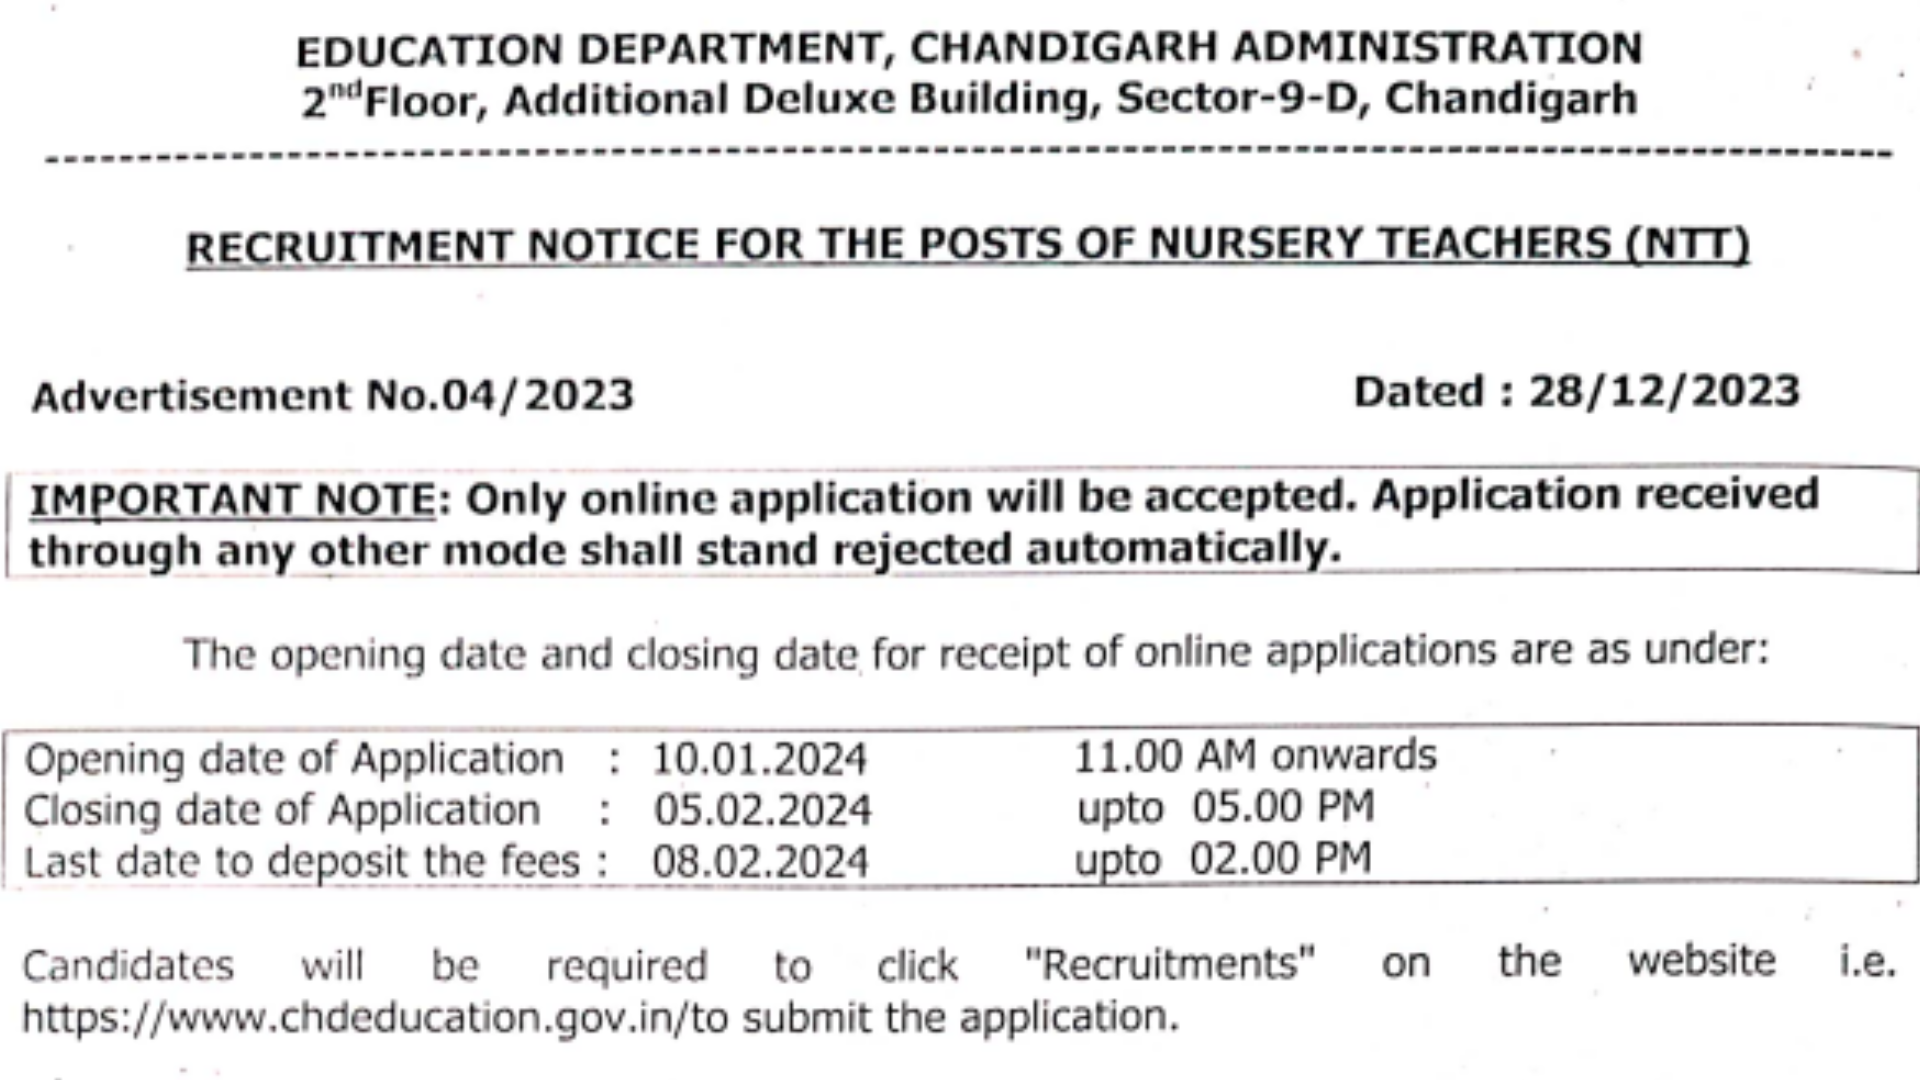 Chandigarh NTT Recruitment 2023-24 Notification and Online Application Form